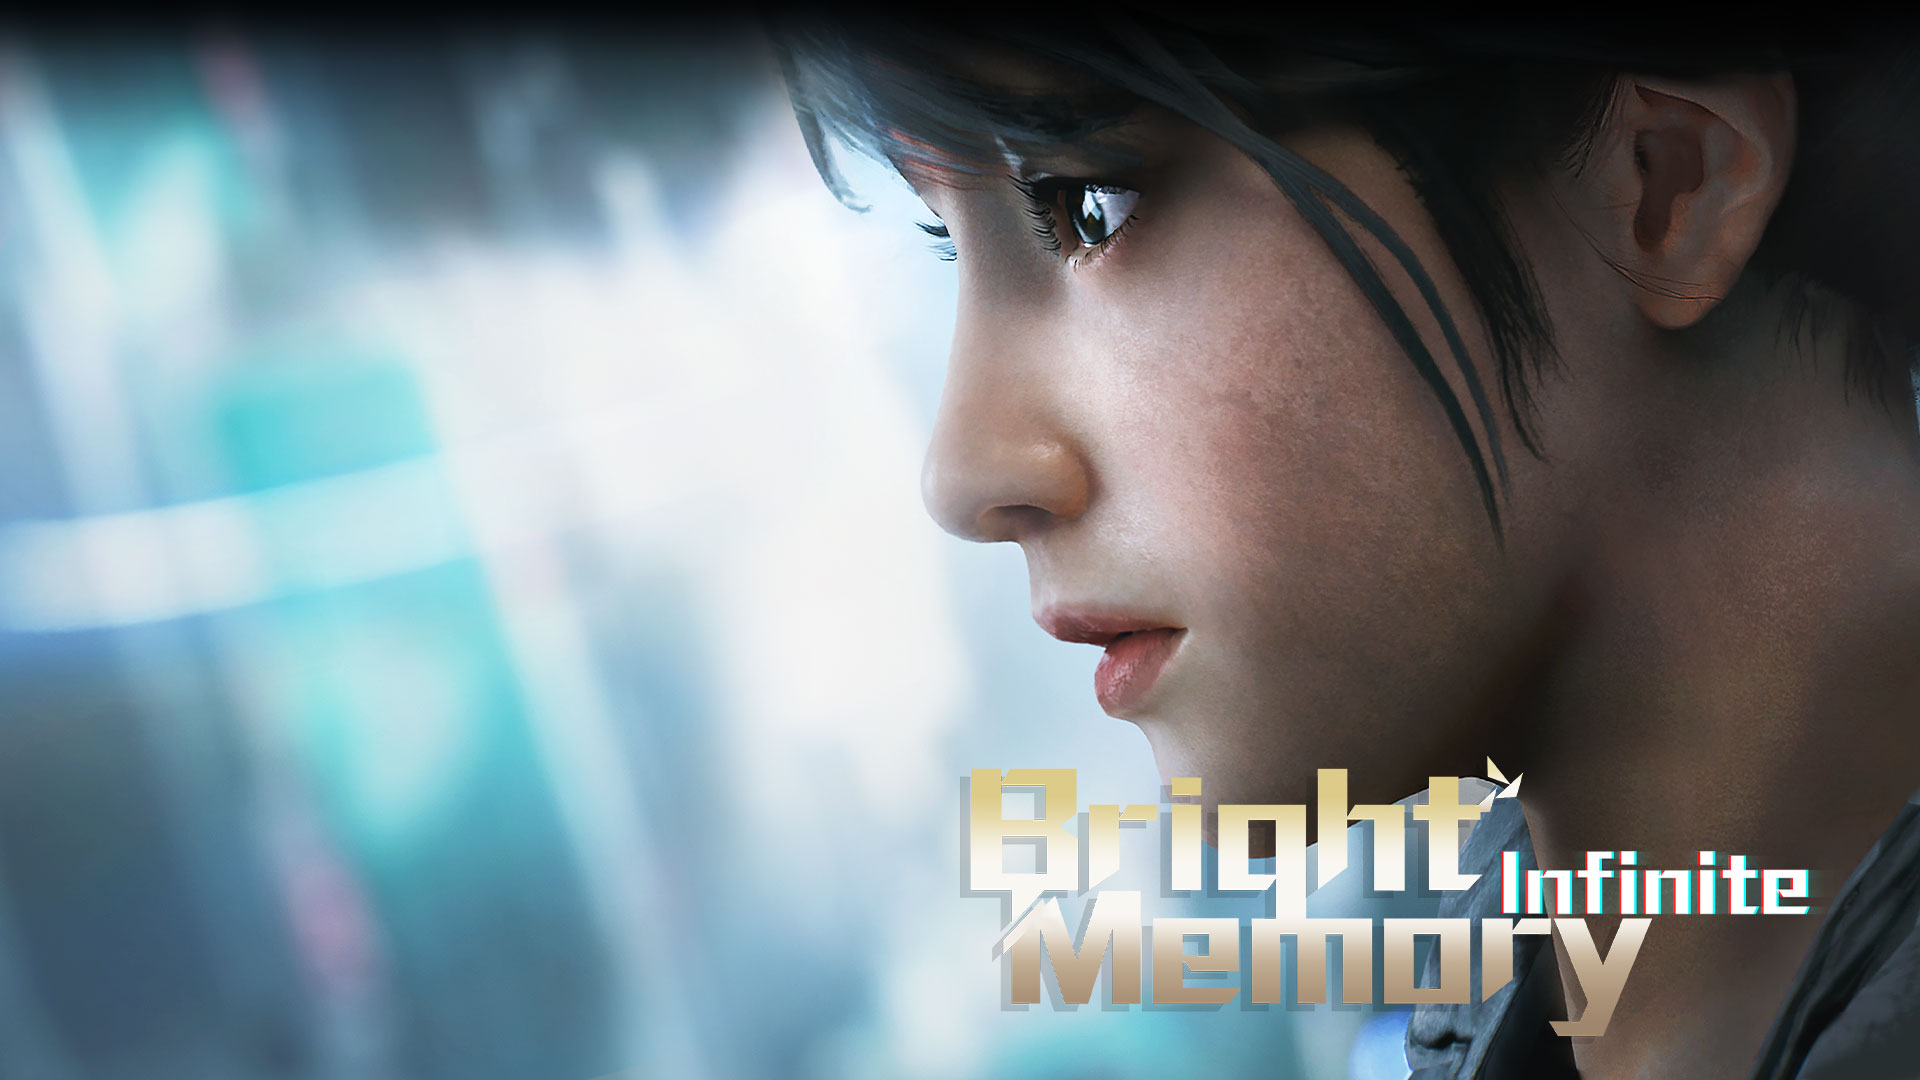 Bright Memory Infinite Xbox